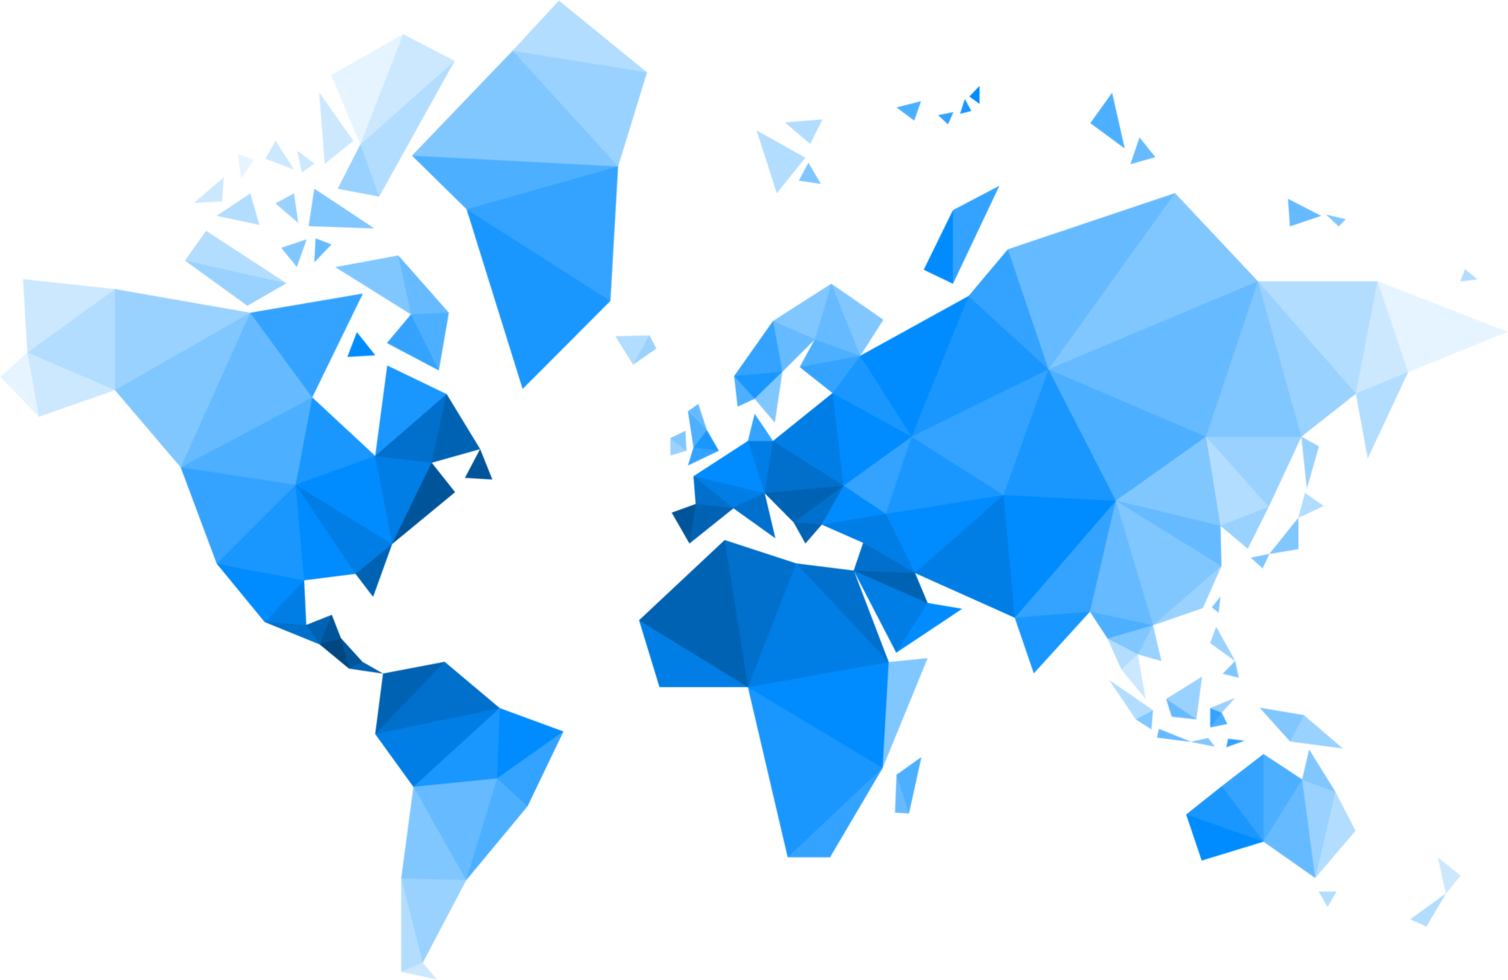 mapa del mundo vectorial poligonal sobre fondo transparente. png